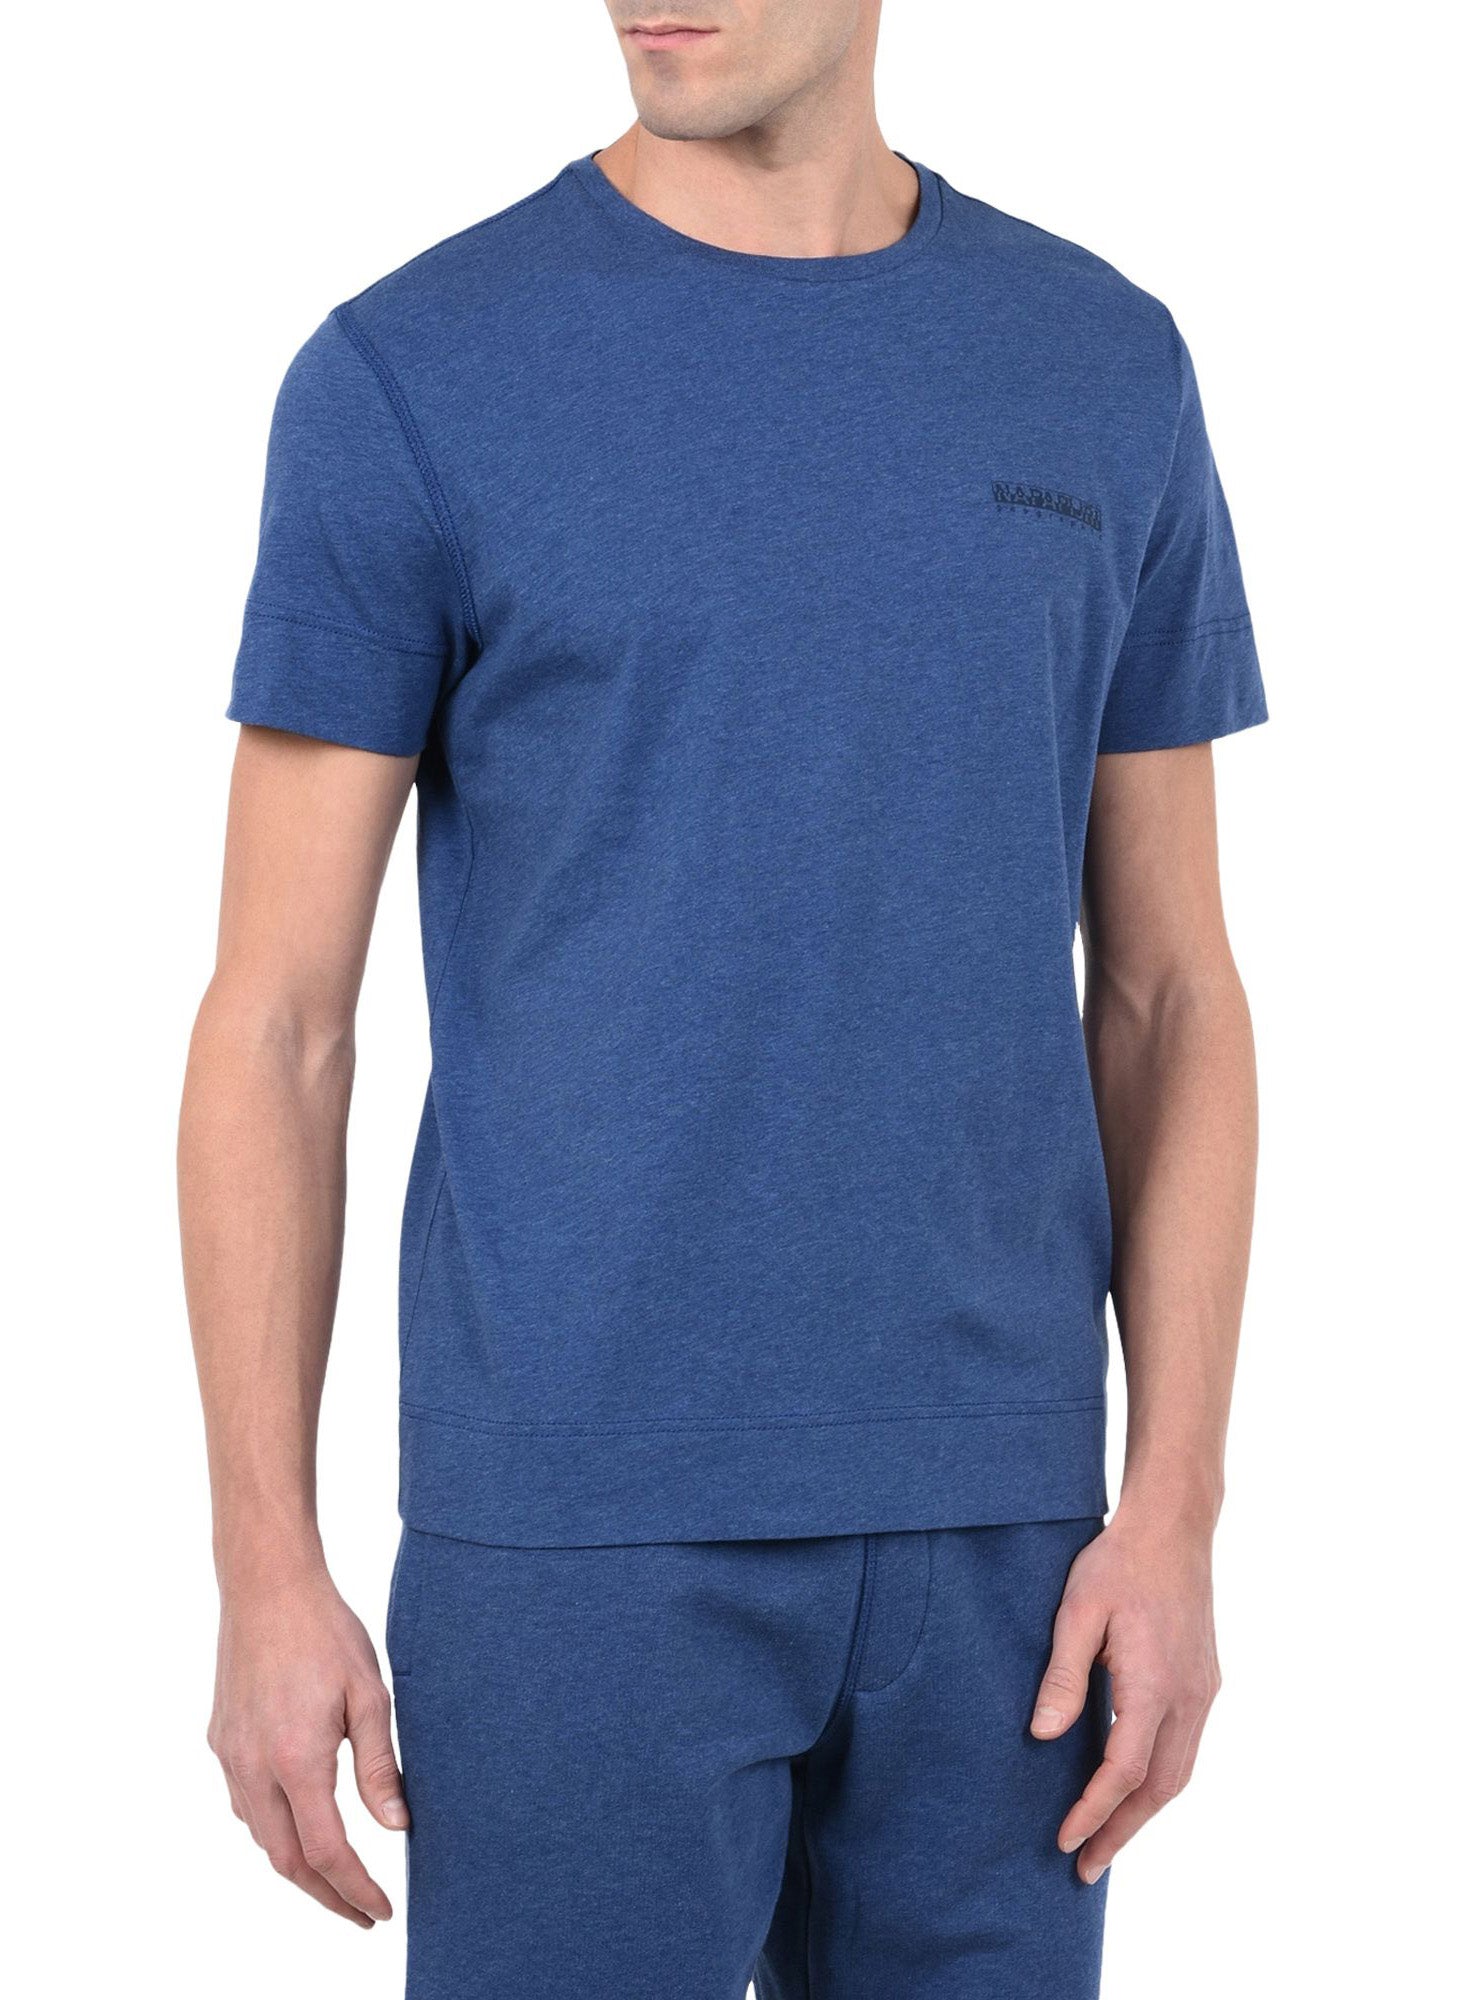 Napapijri Shew T Shirt in Blue Depths